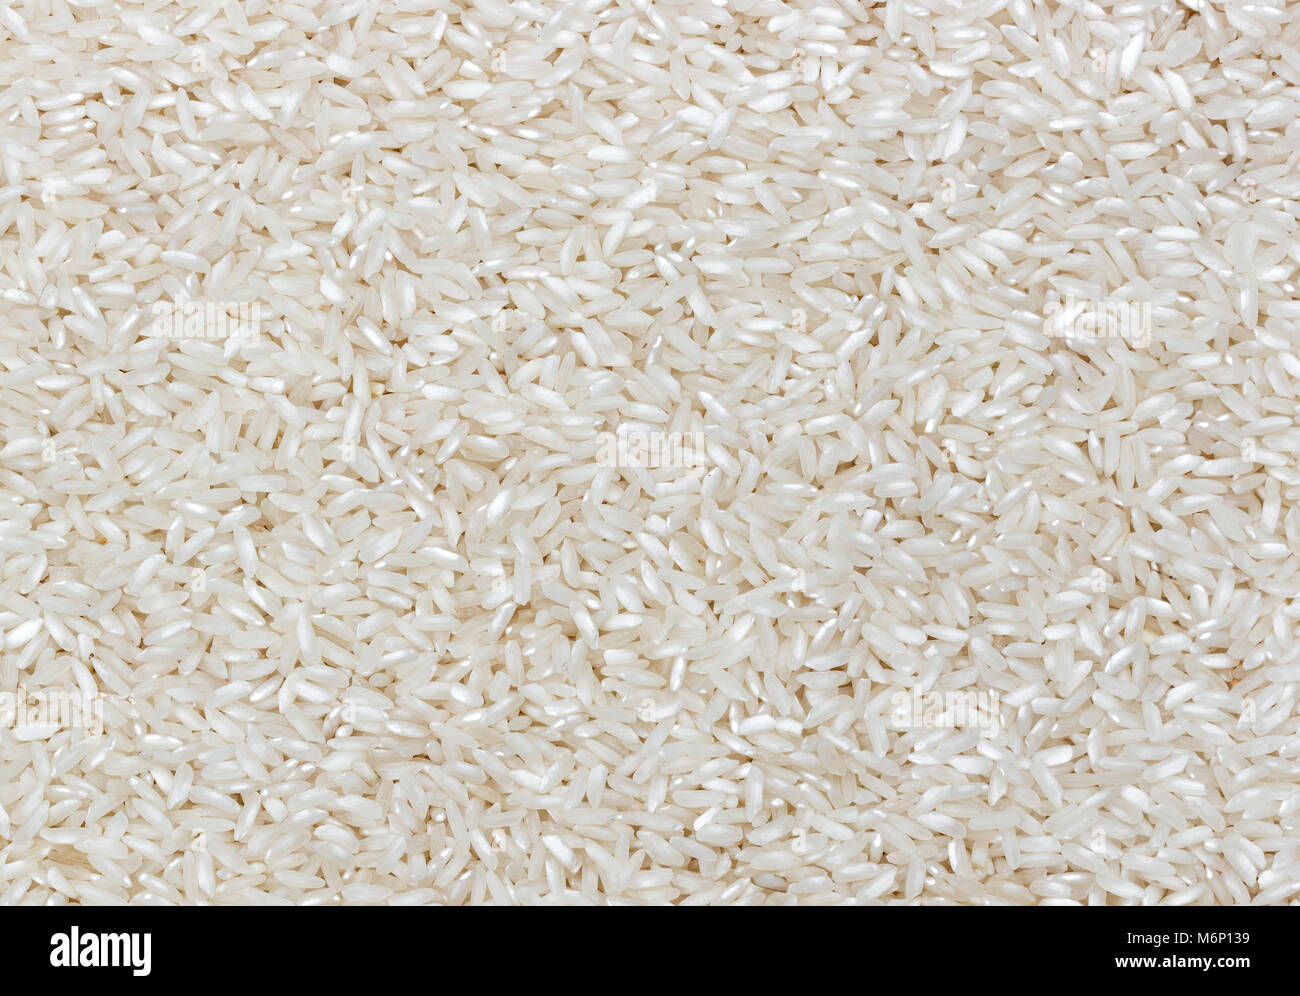 Polished rice grain texture Stock Photo - Alamy